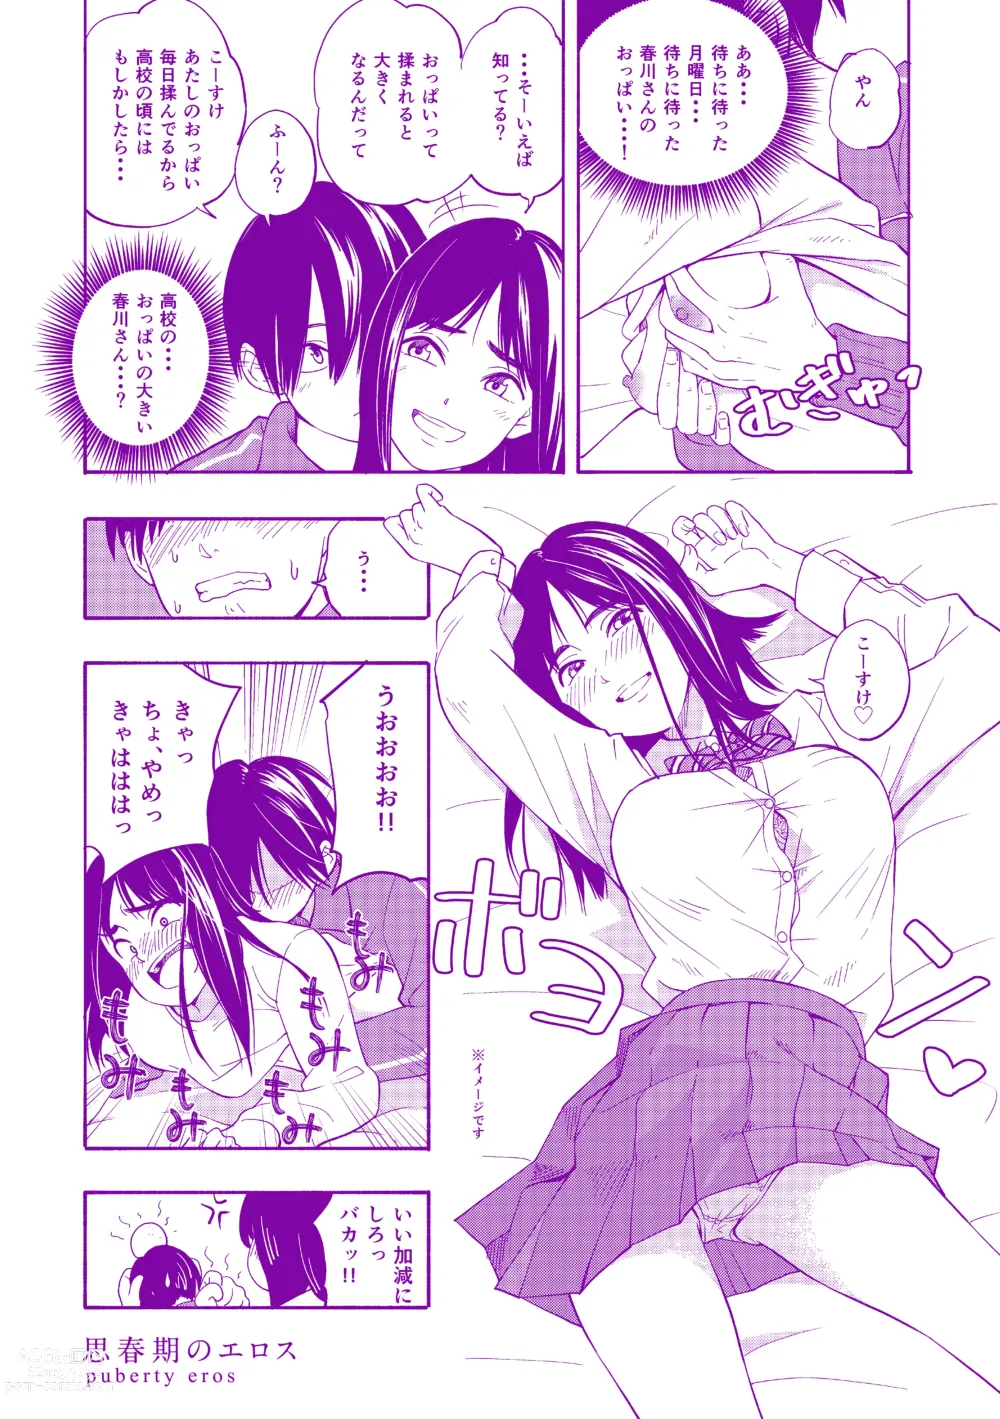 Page 180 of manga Shishunki no Eros - puberty eros + DLsite Kounyu Tokuten